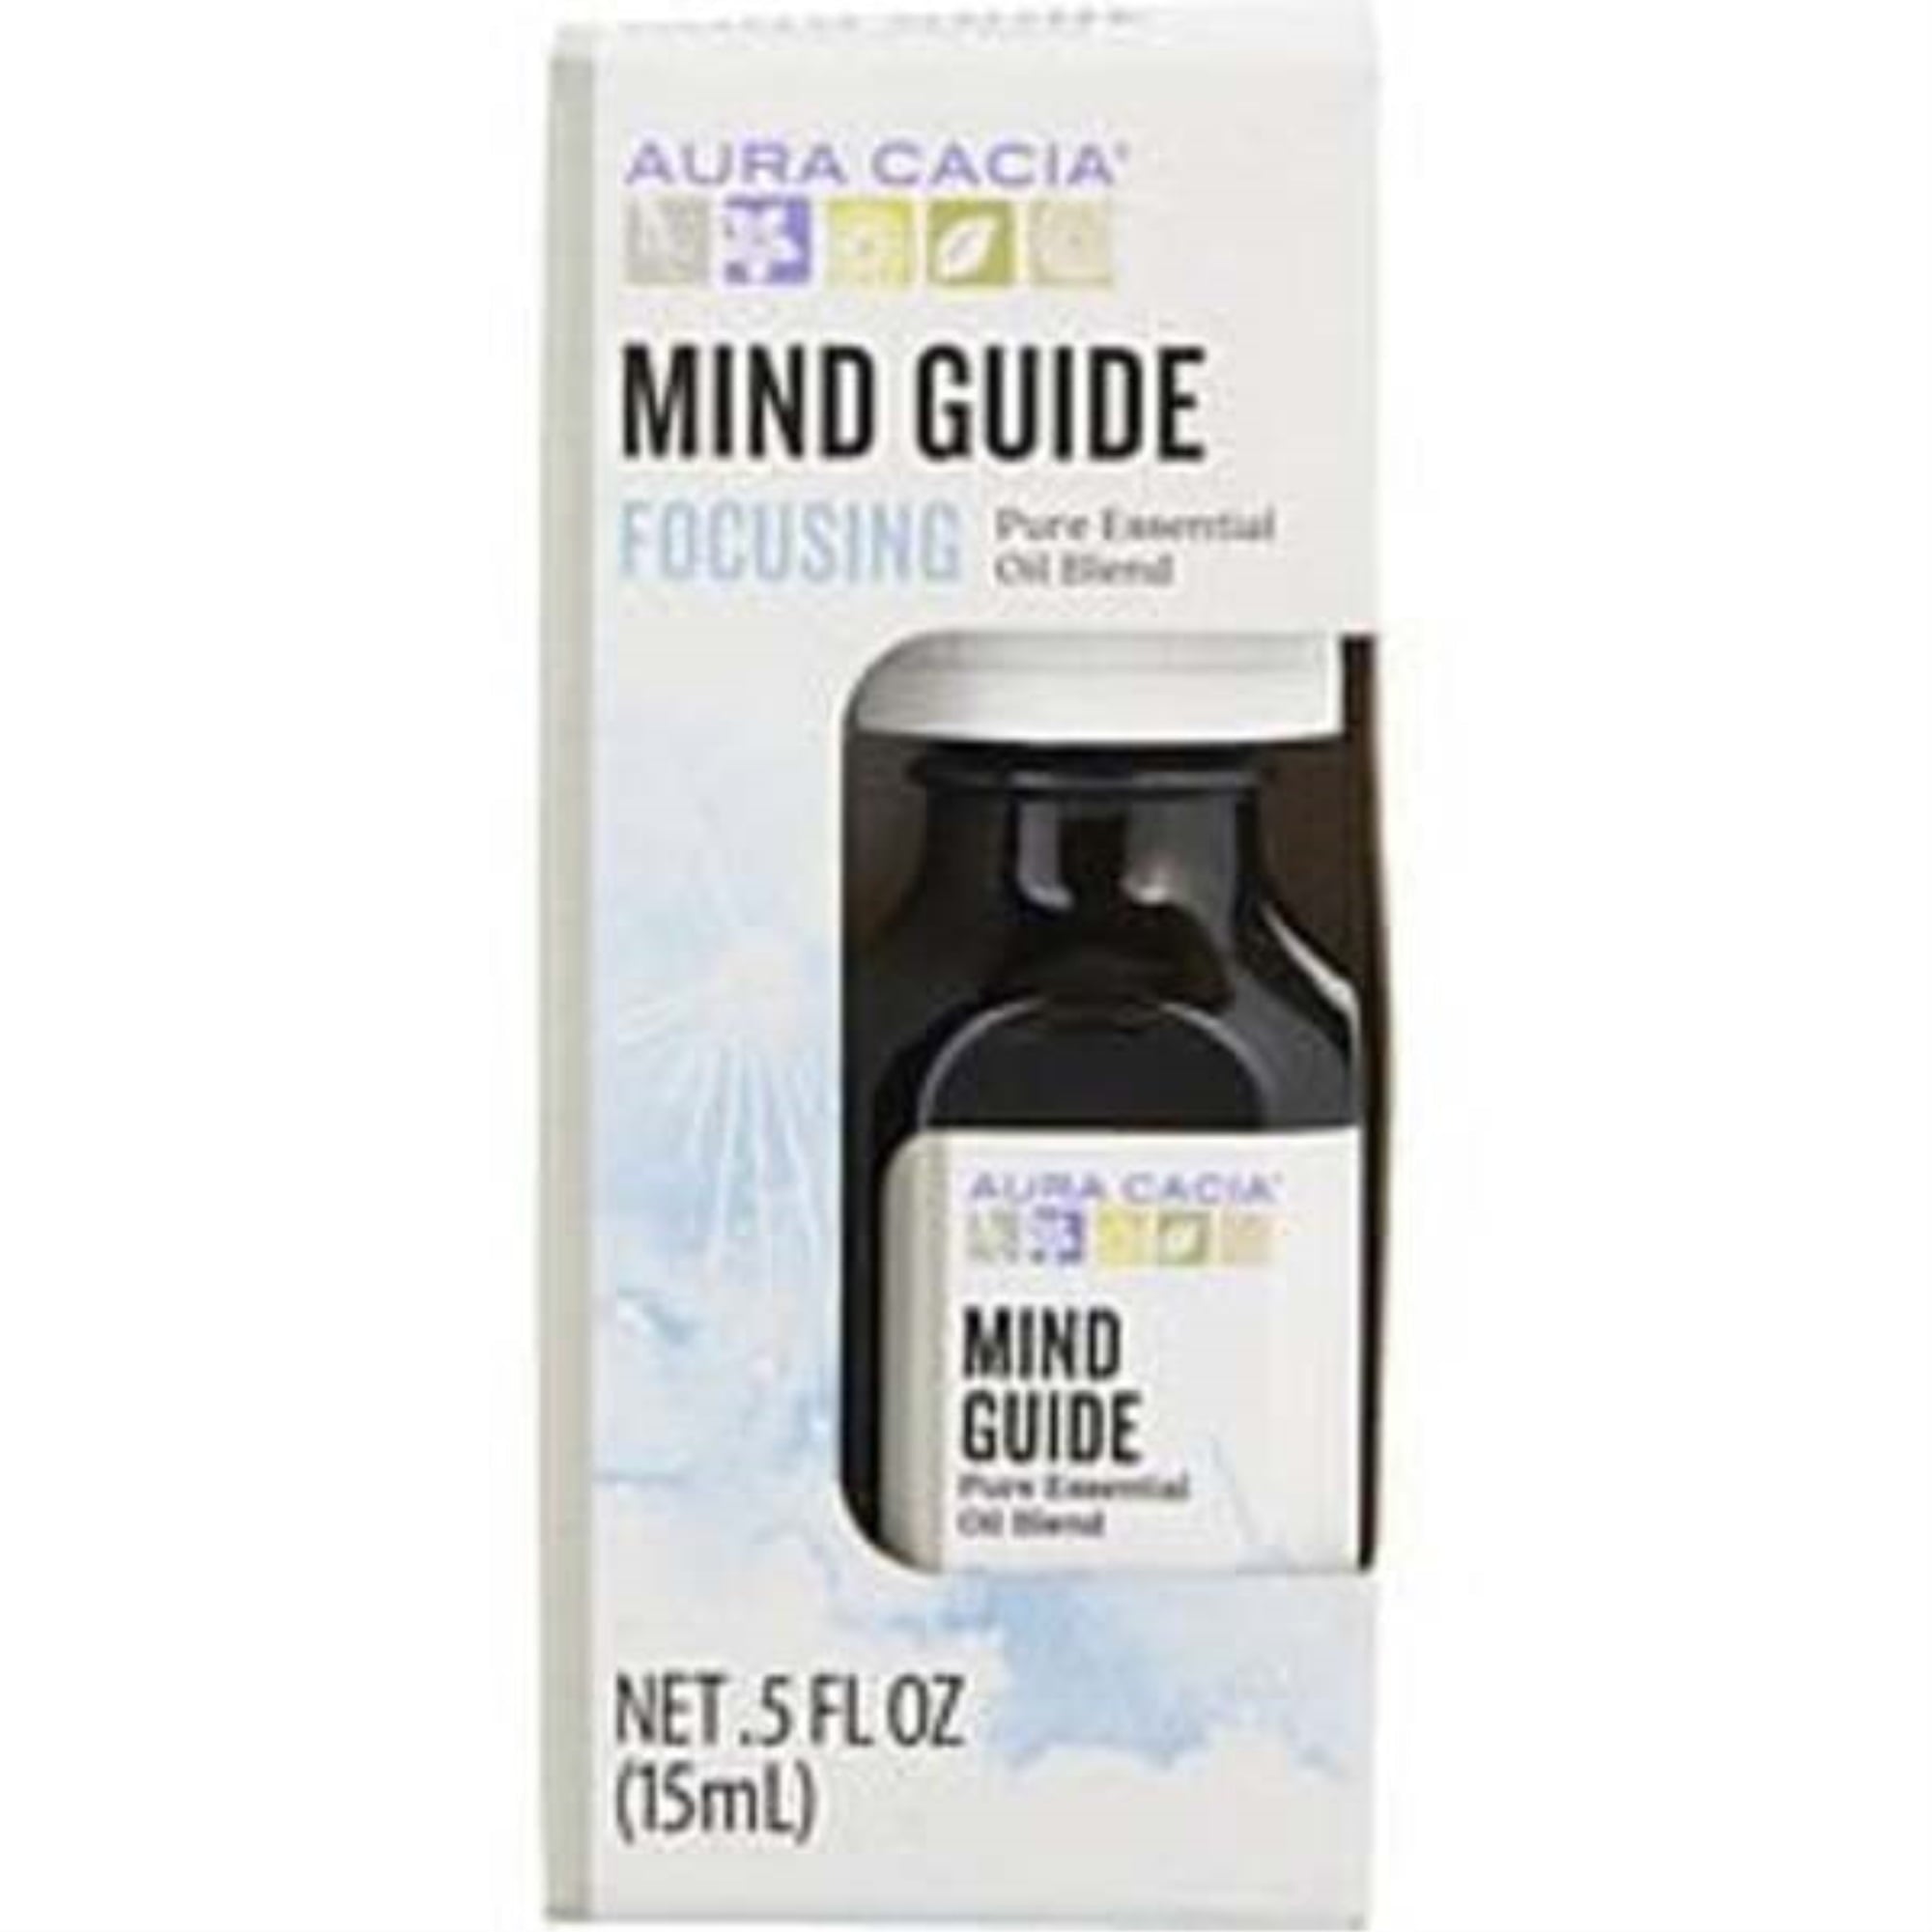 Aura Cacia Mind Guide Focusing Pure Essential Oil Blend 0.5 oz Bottle